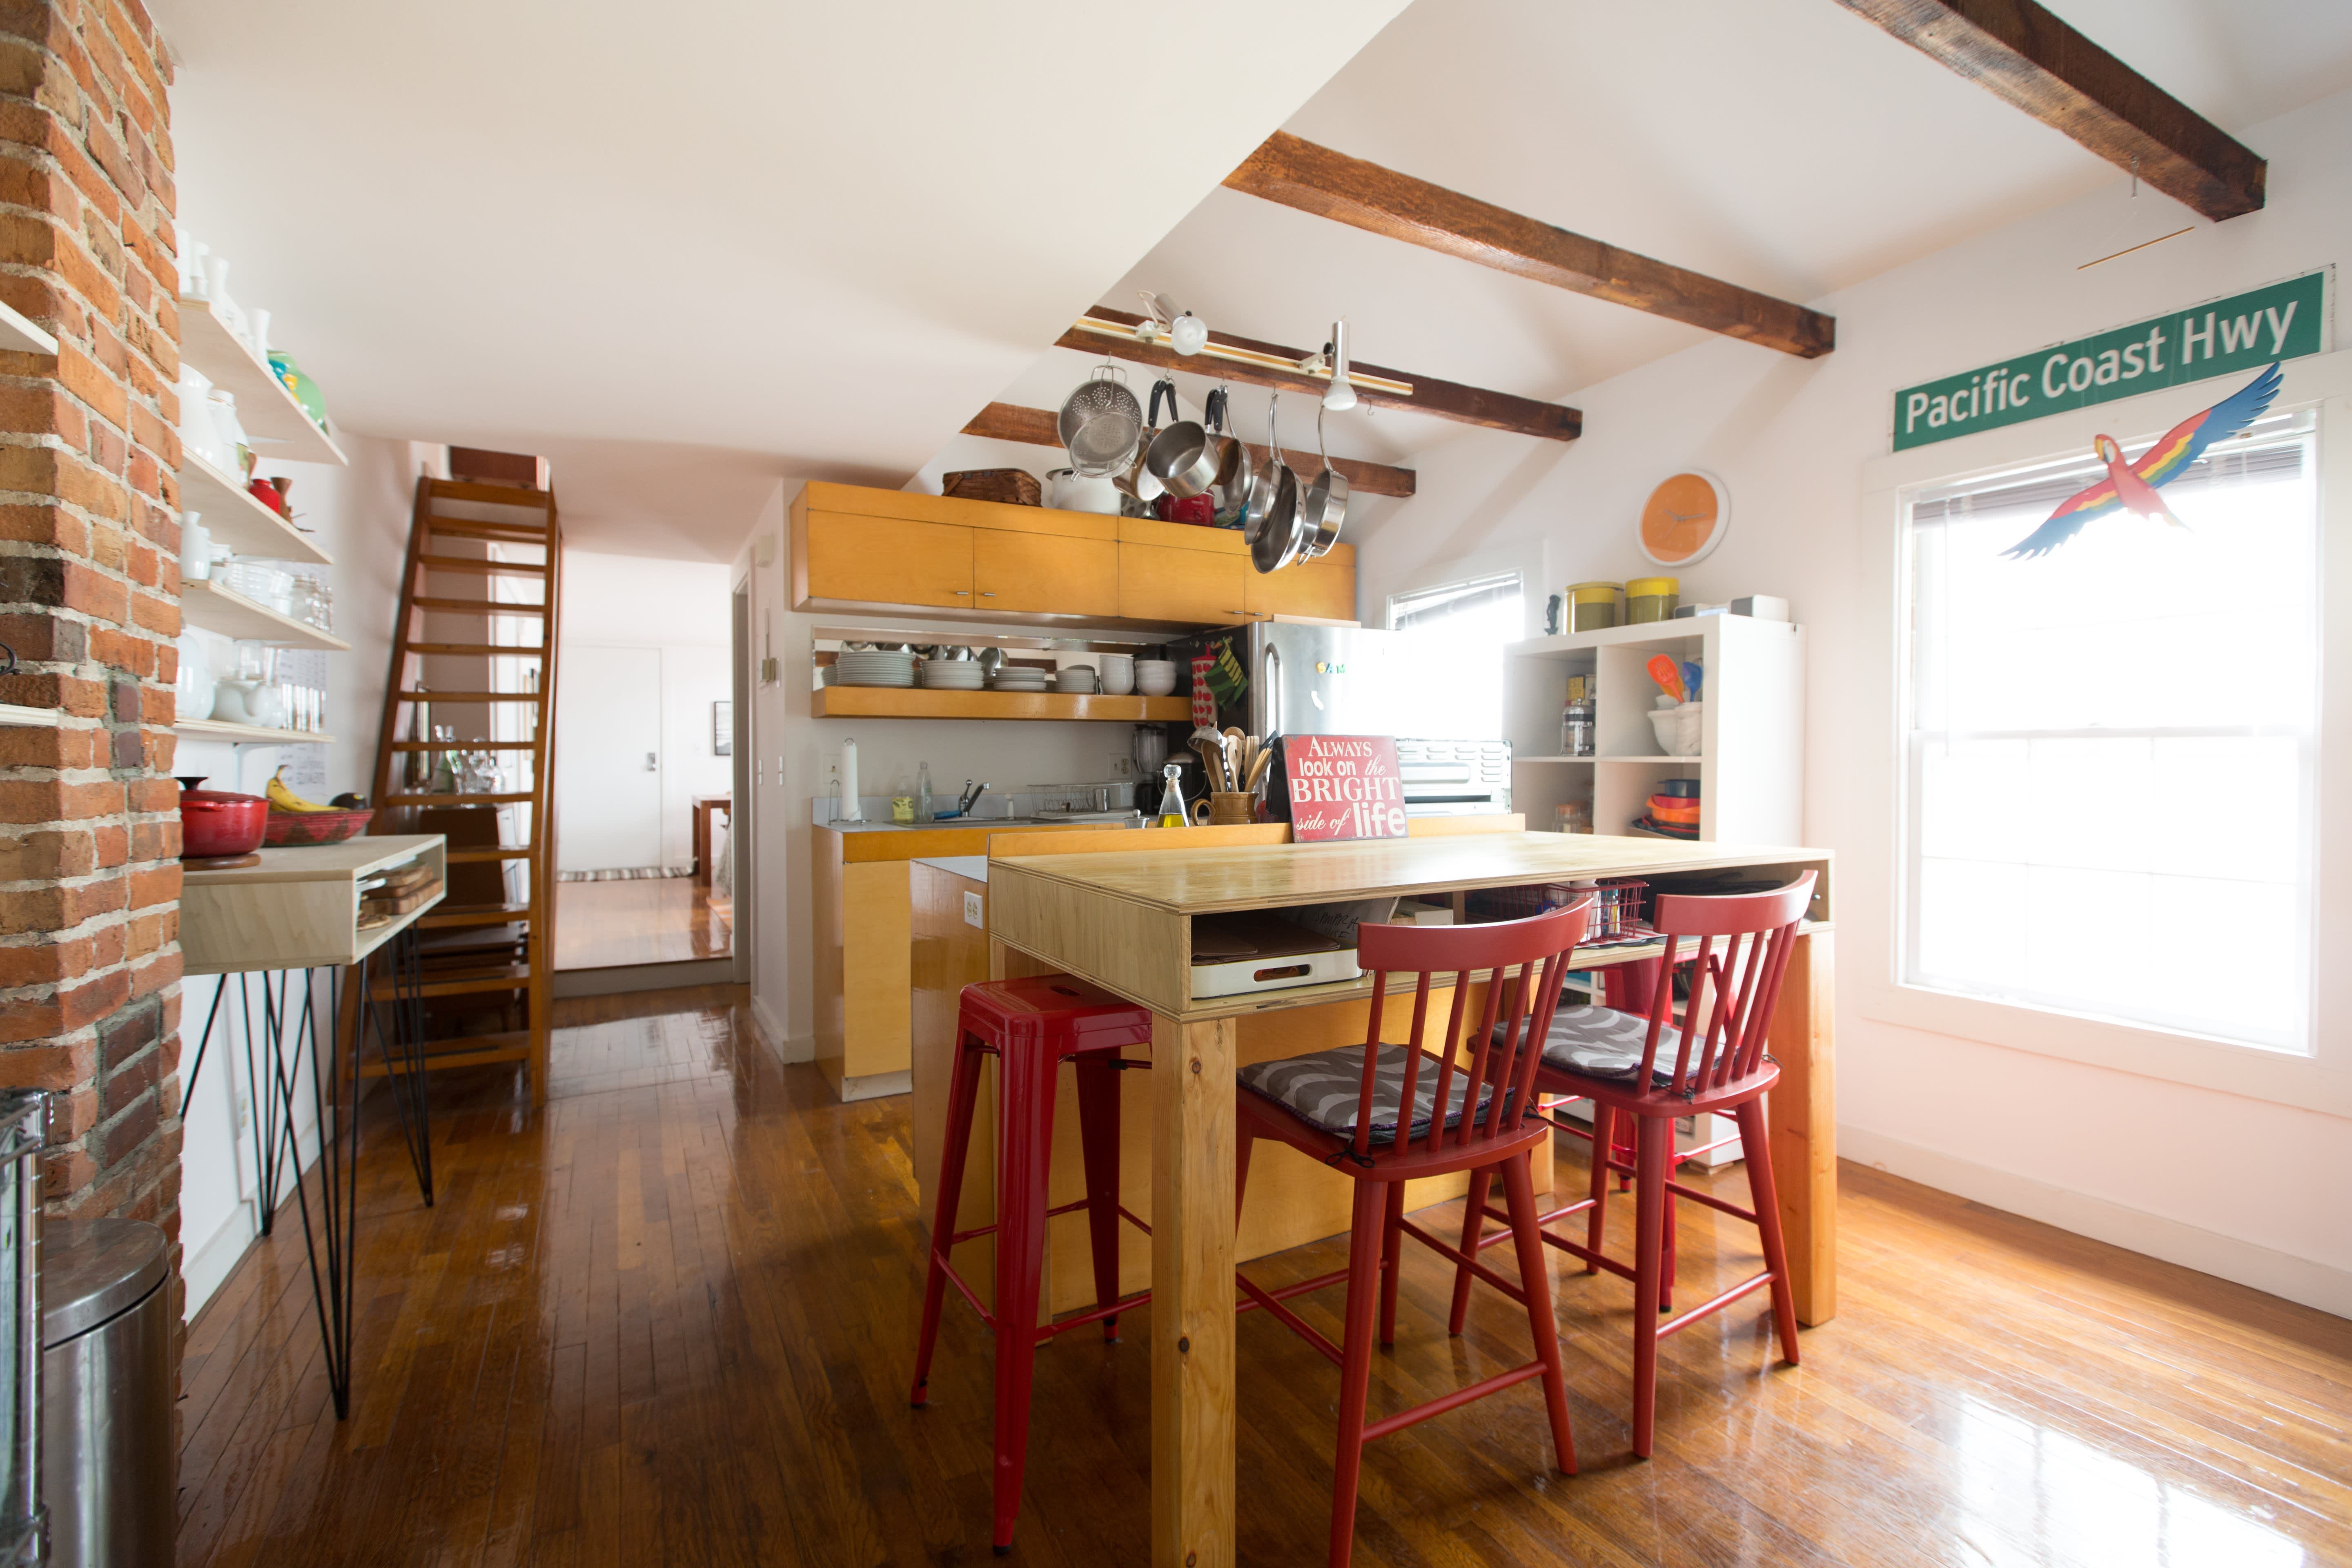 Review: KitchenAid Cordless Food Chopper » the practical kitchen